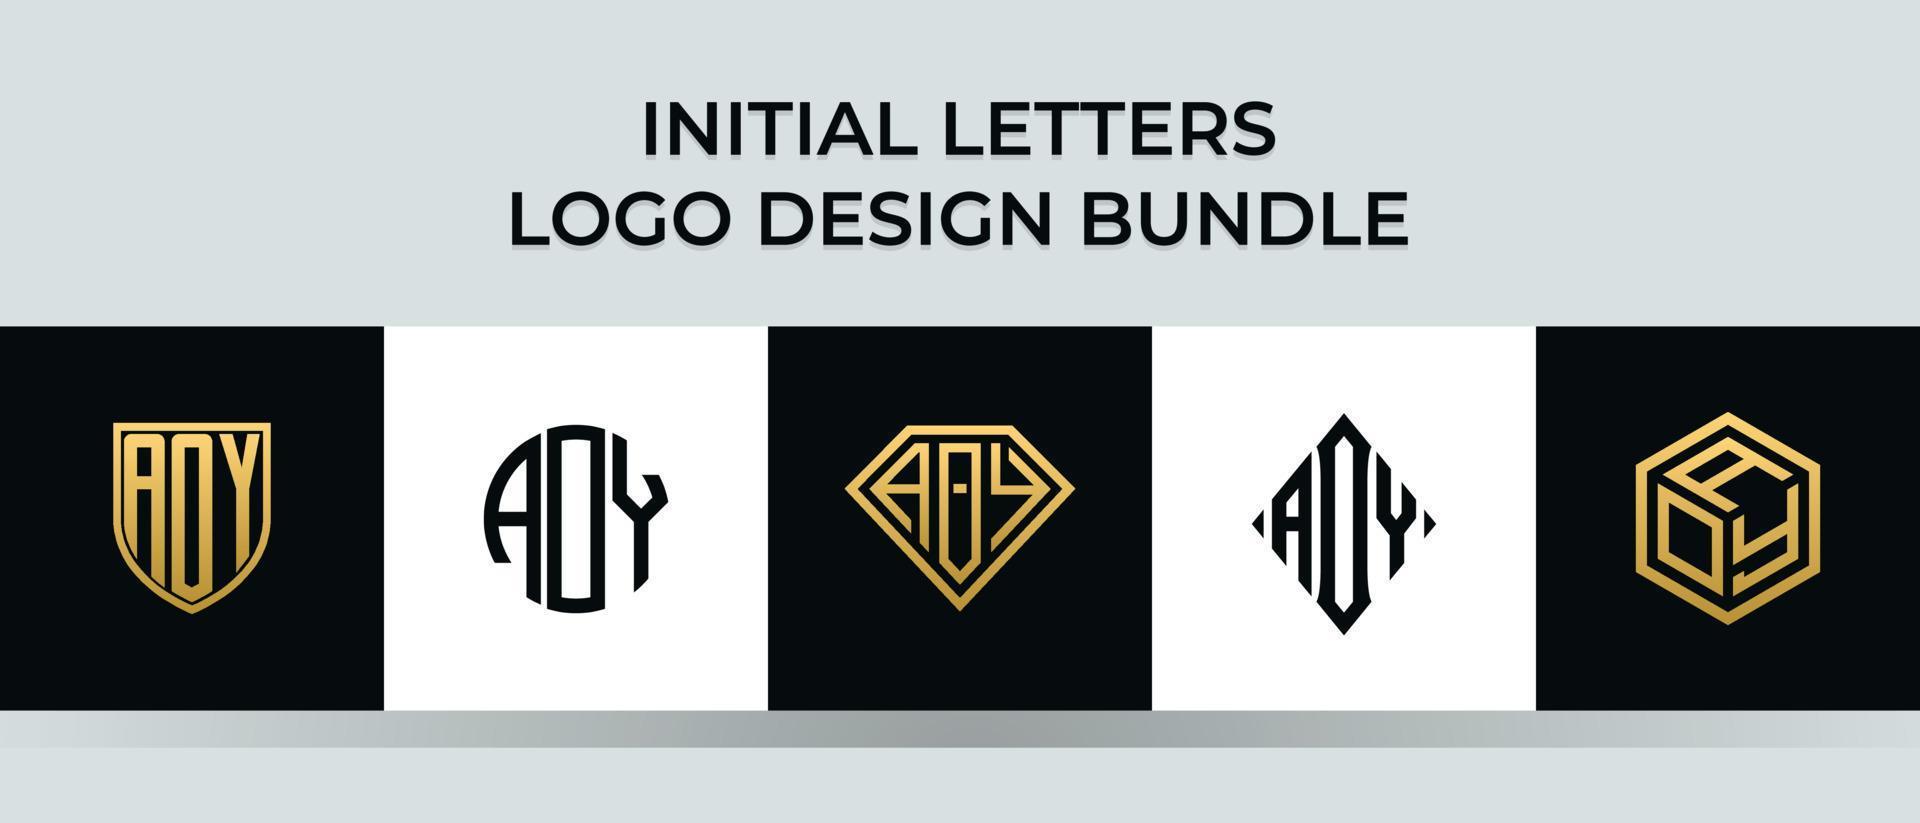 Anfangsbuchstaben Aoy Logo Designs Bundle vektor